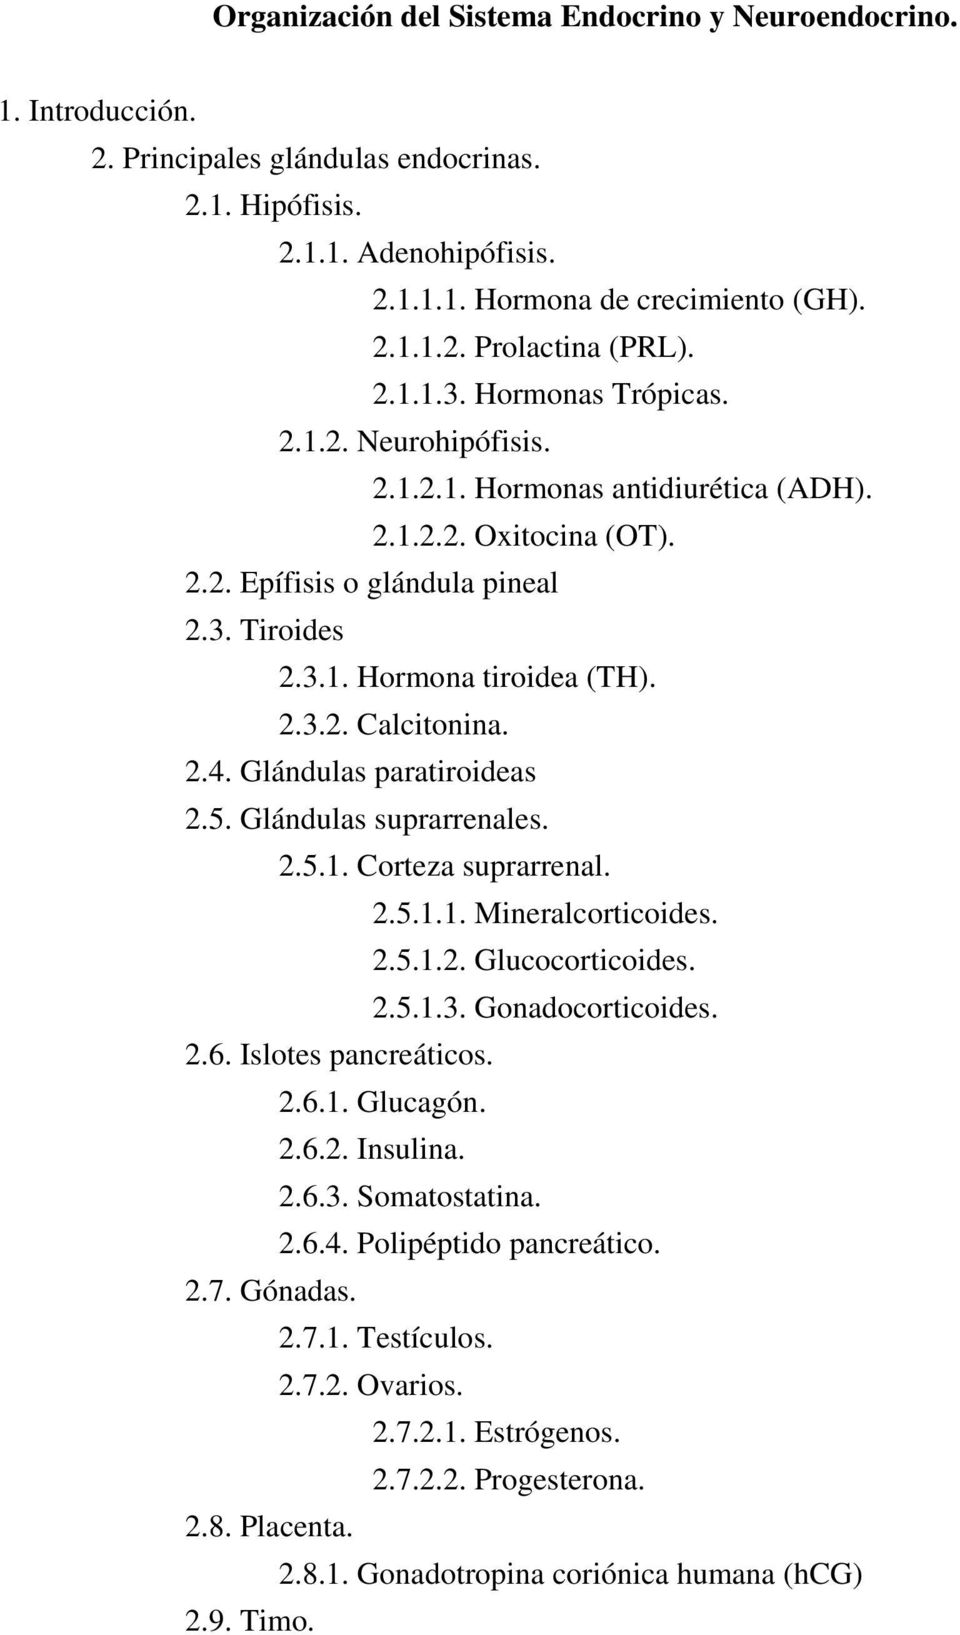 2.4. Glándulas paratiroideas 2.5. Glándulas suprarrenales. 2.5.1. Corteza suprarrenal. 2.5.1.1. Mineralcorticoides. 2.5.1.2. Glucocorticoides. 2.5.1.3. Gonadocorticoides. 2.6. Islotes pancreáticos. 2.6.1. Glucagón.